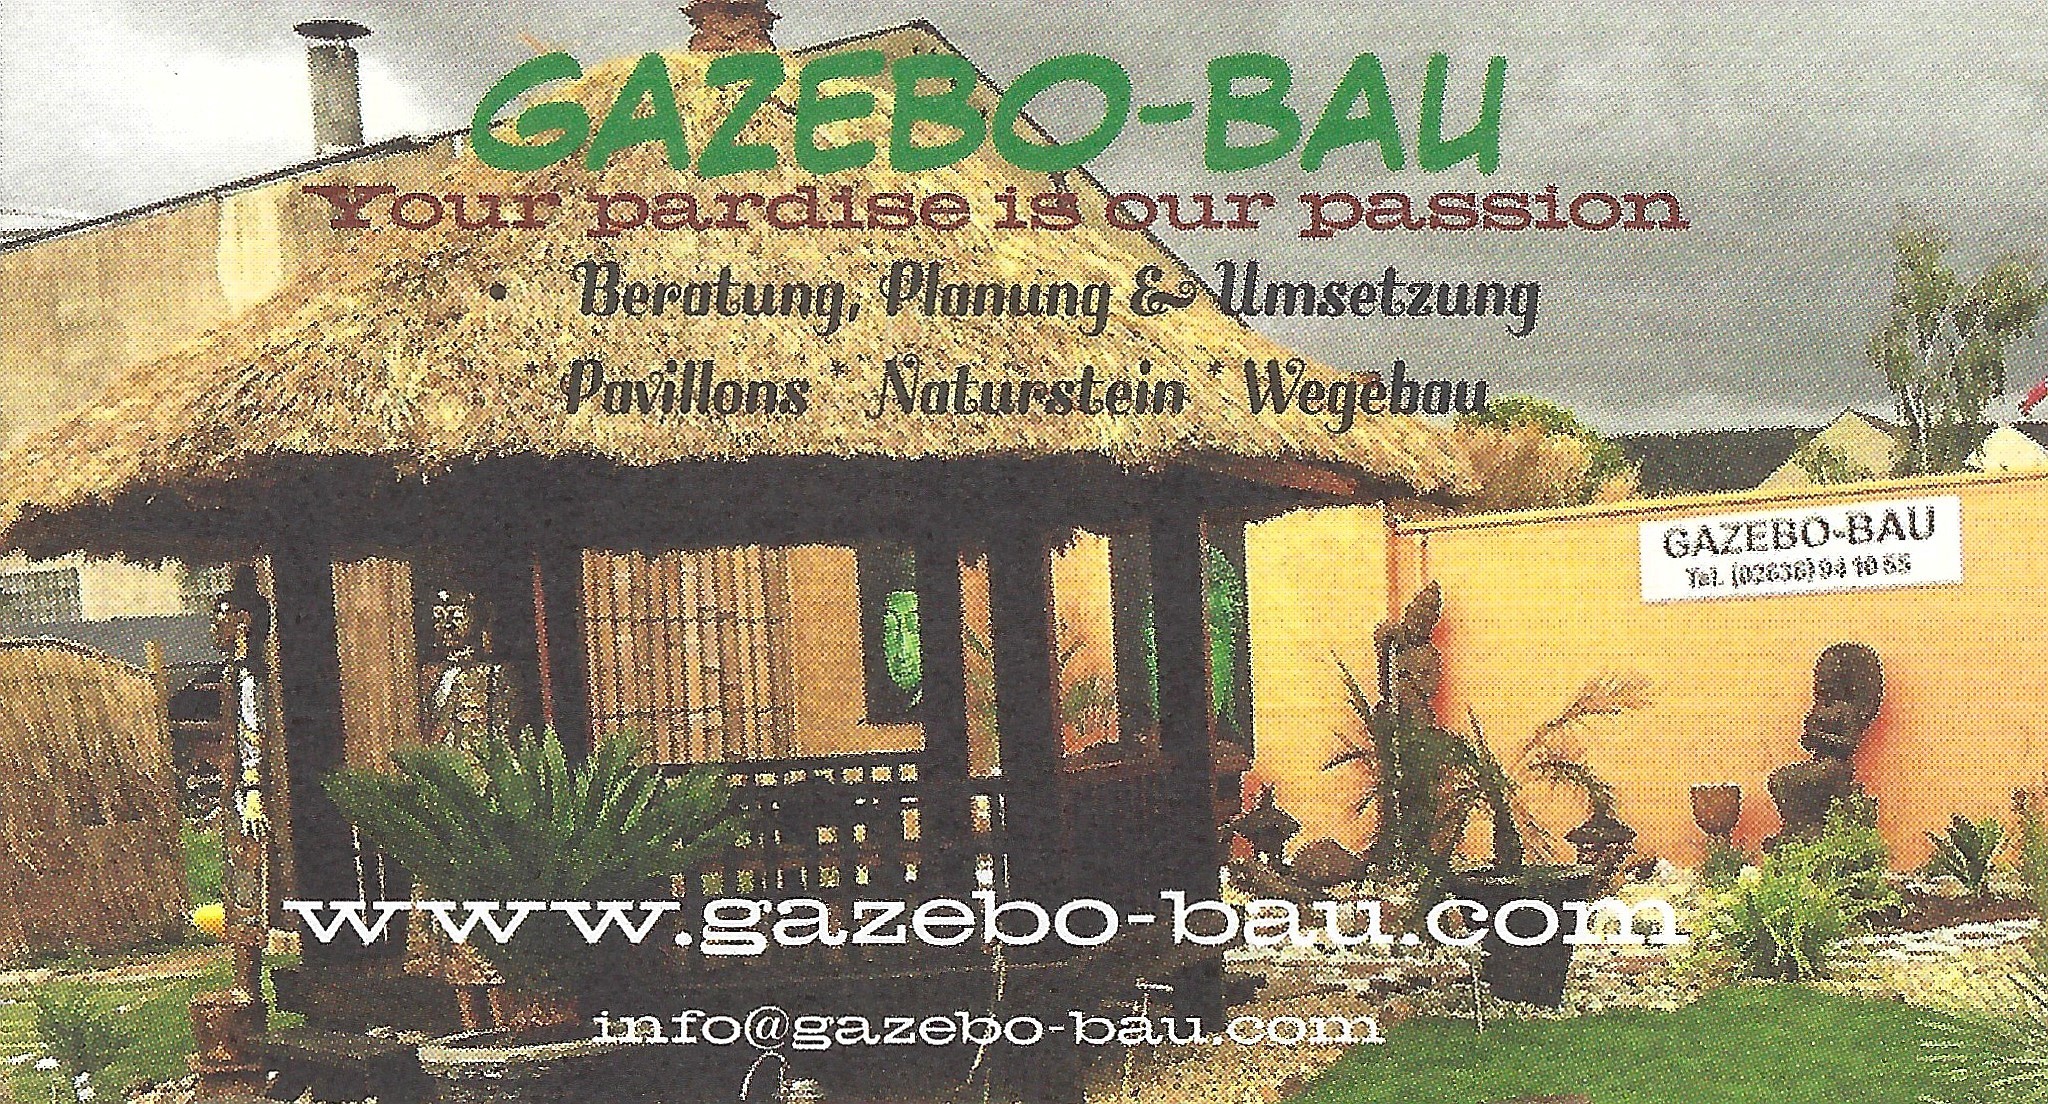 Gazebo-Bau